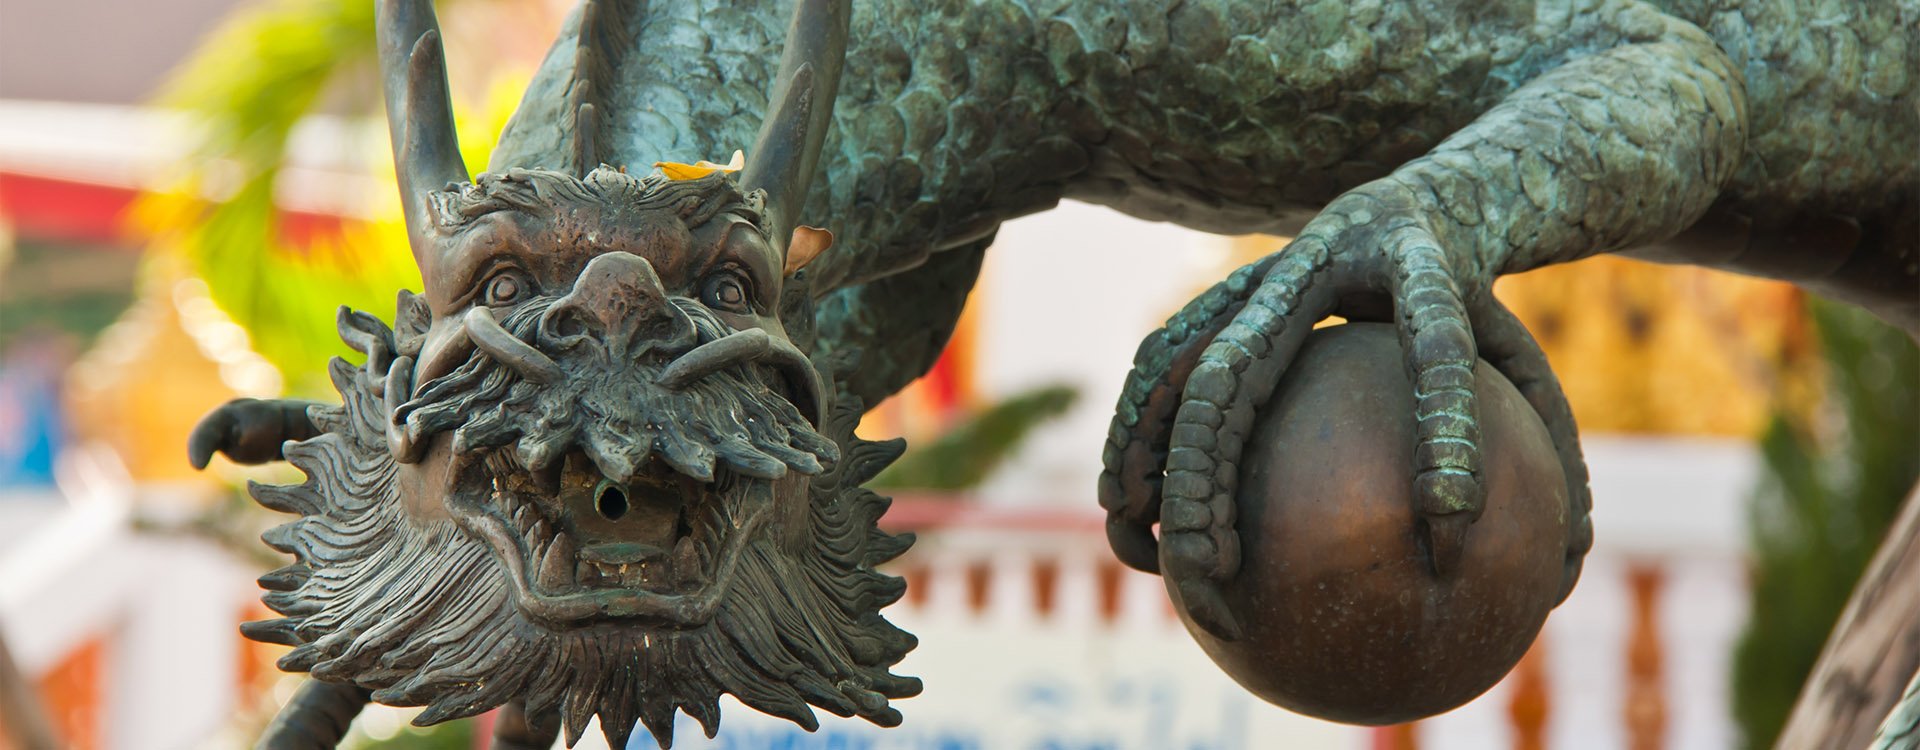 China, Shanghai, Dragon luck sculpture